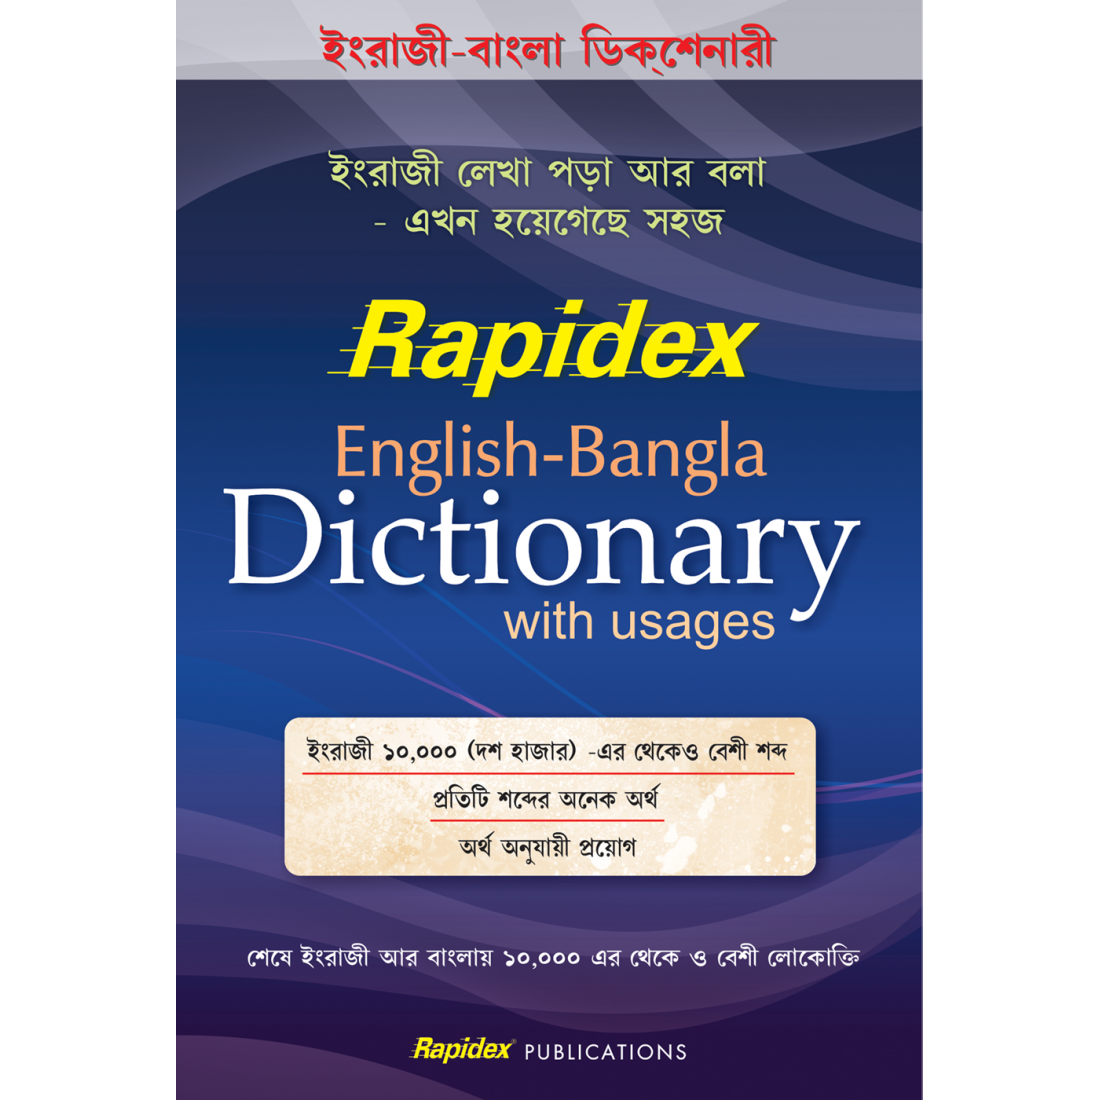 Quick Dictionary Xp English To Bangla